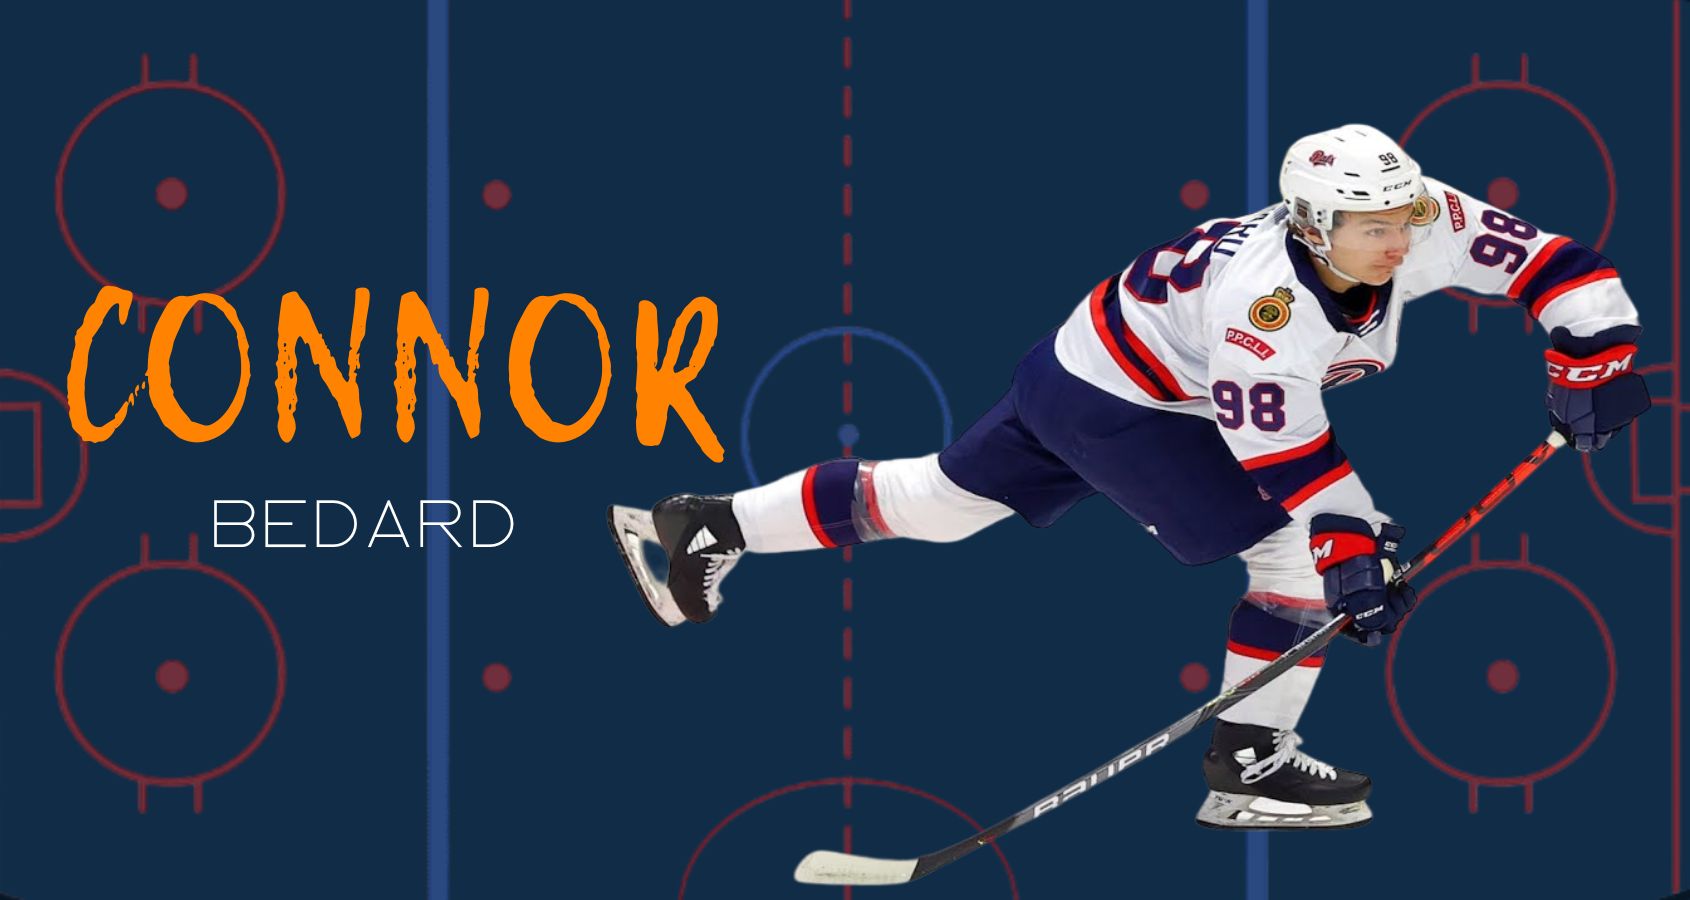 Connor Bedard ice hockey player career and news